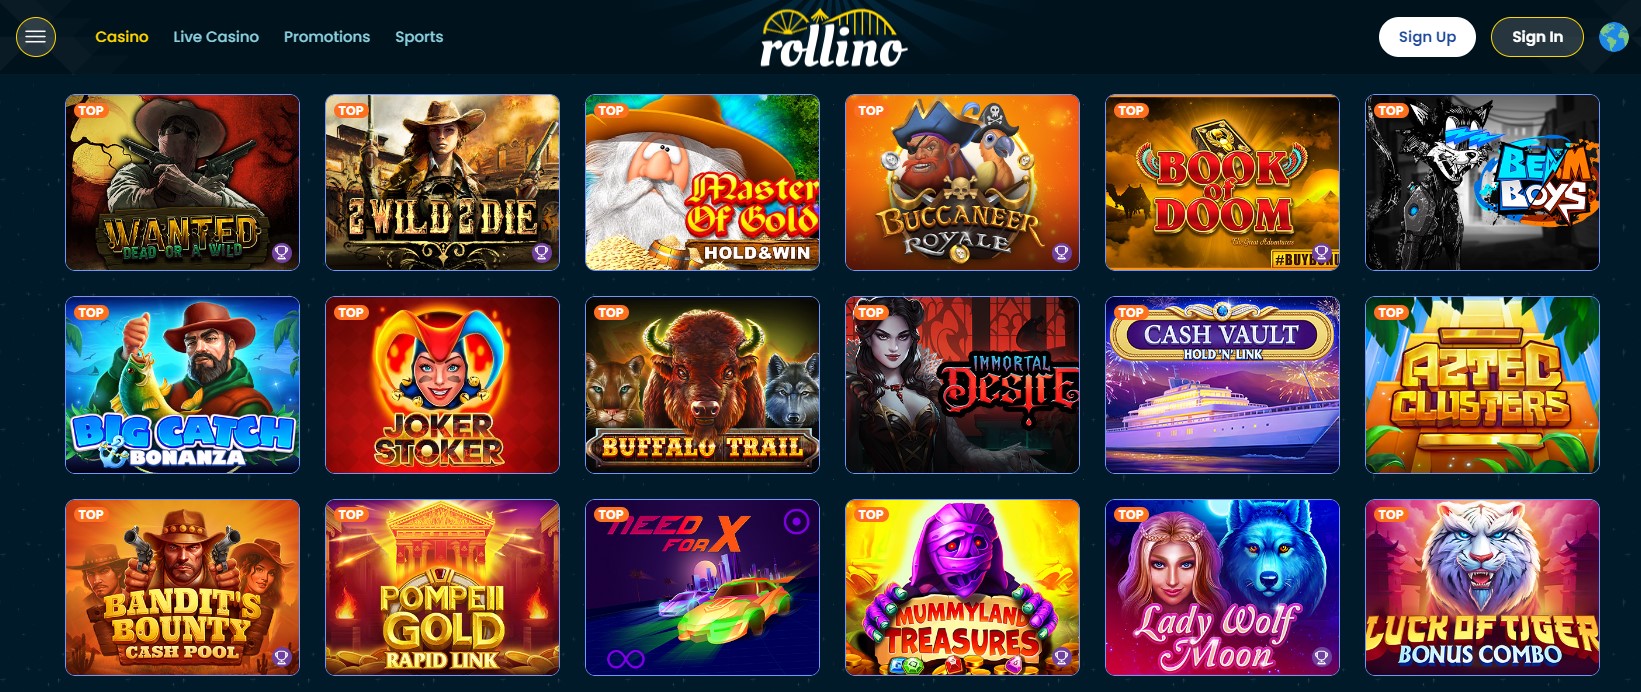 Rollino Casino Games Review